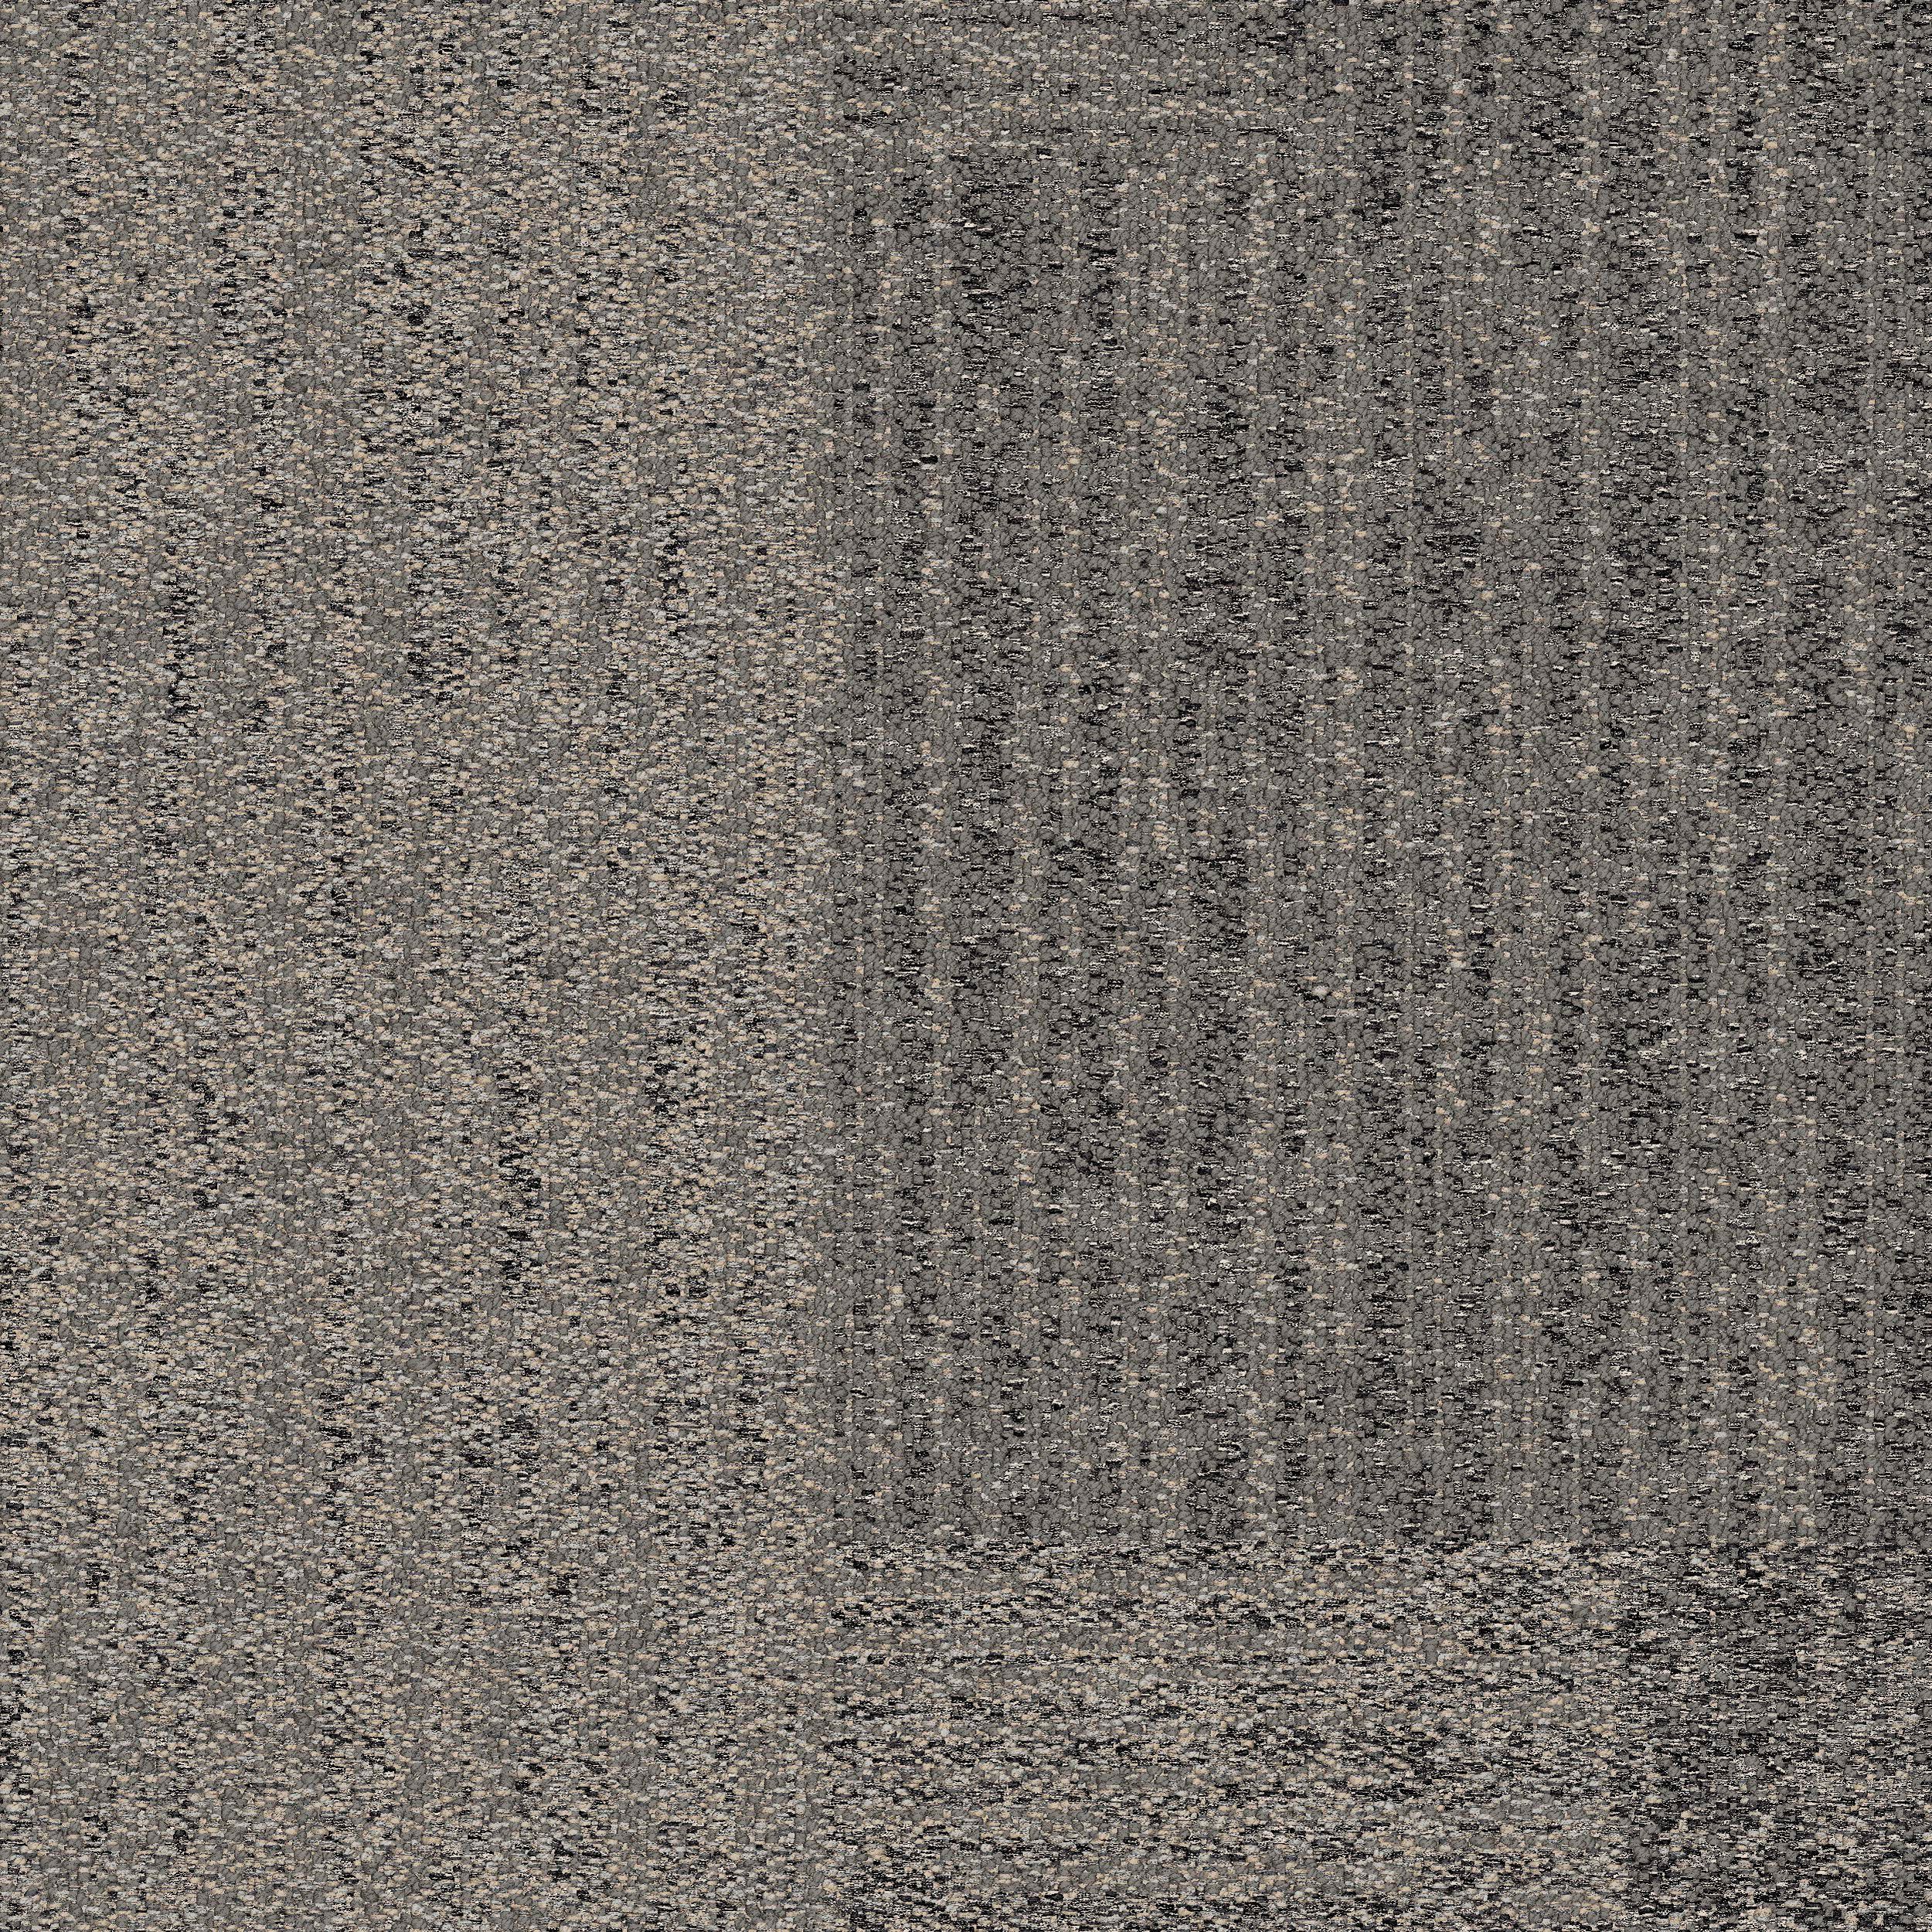 Cambria Carpet Tile In Mist imagen número 2